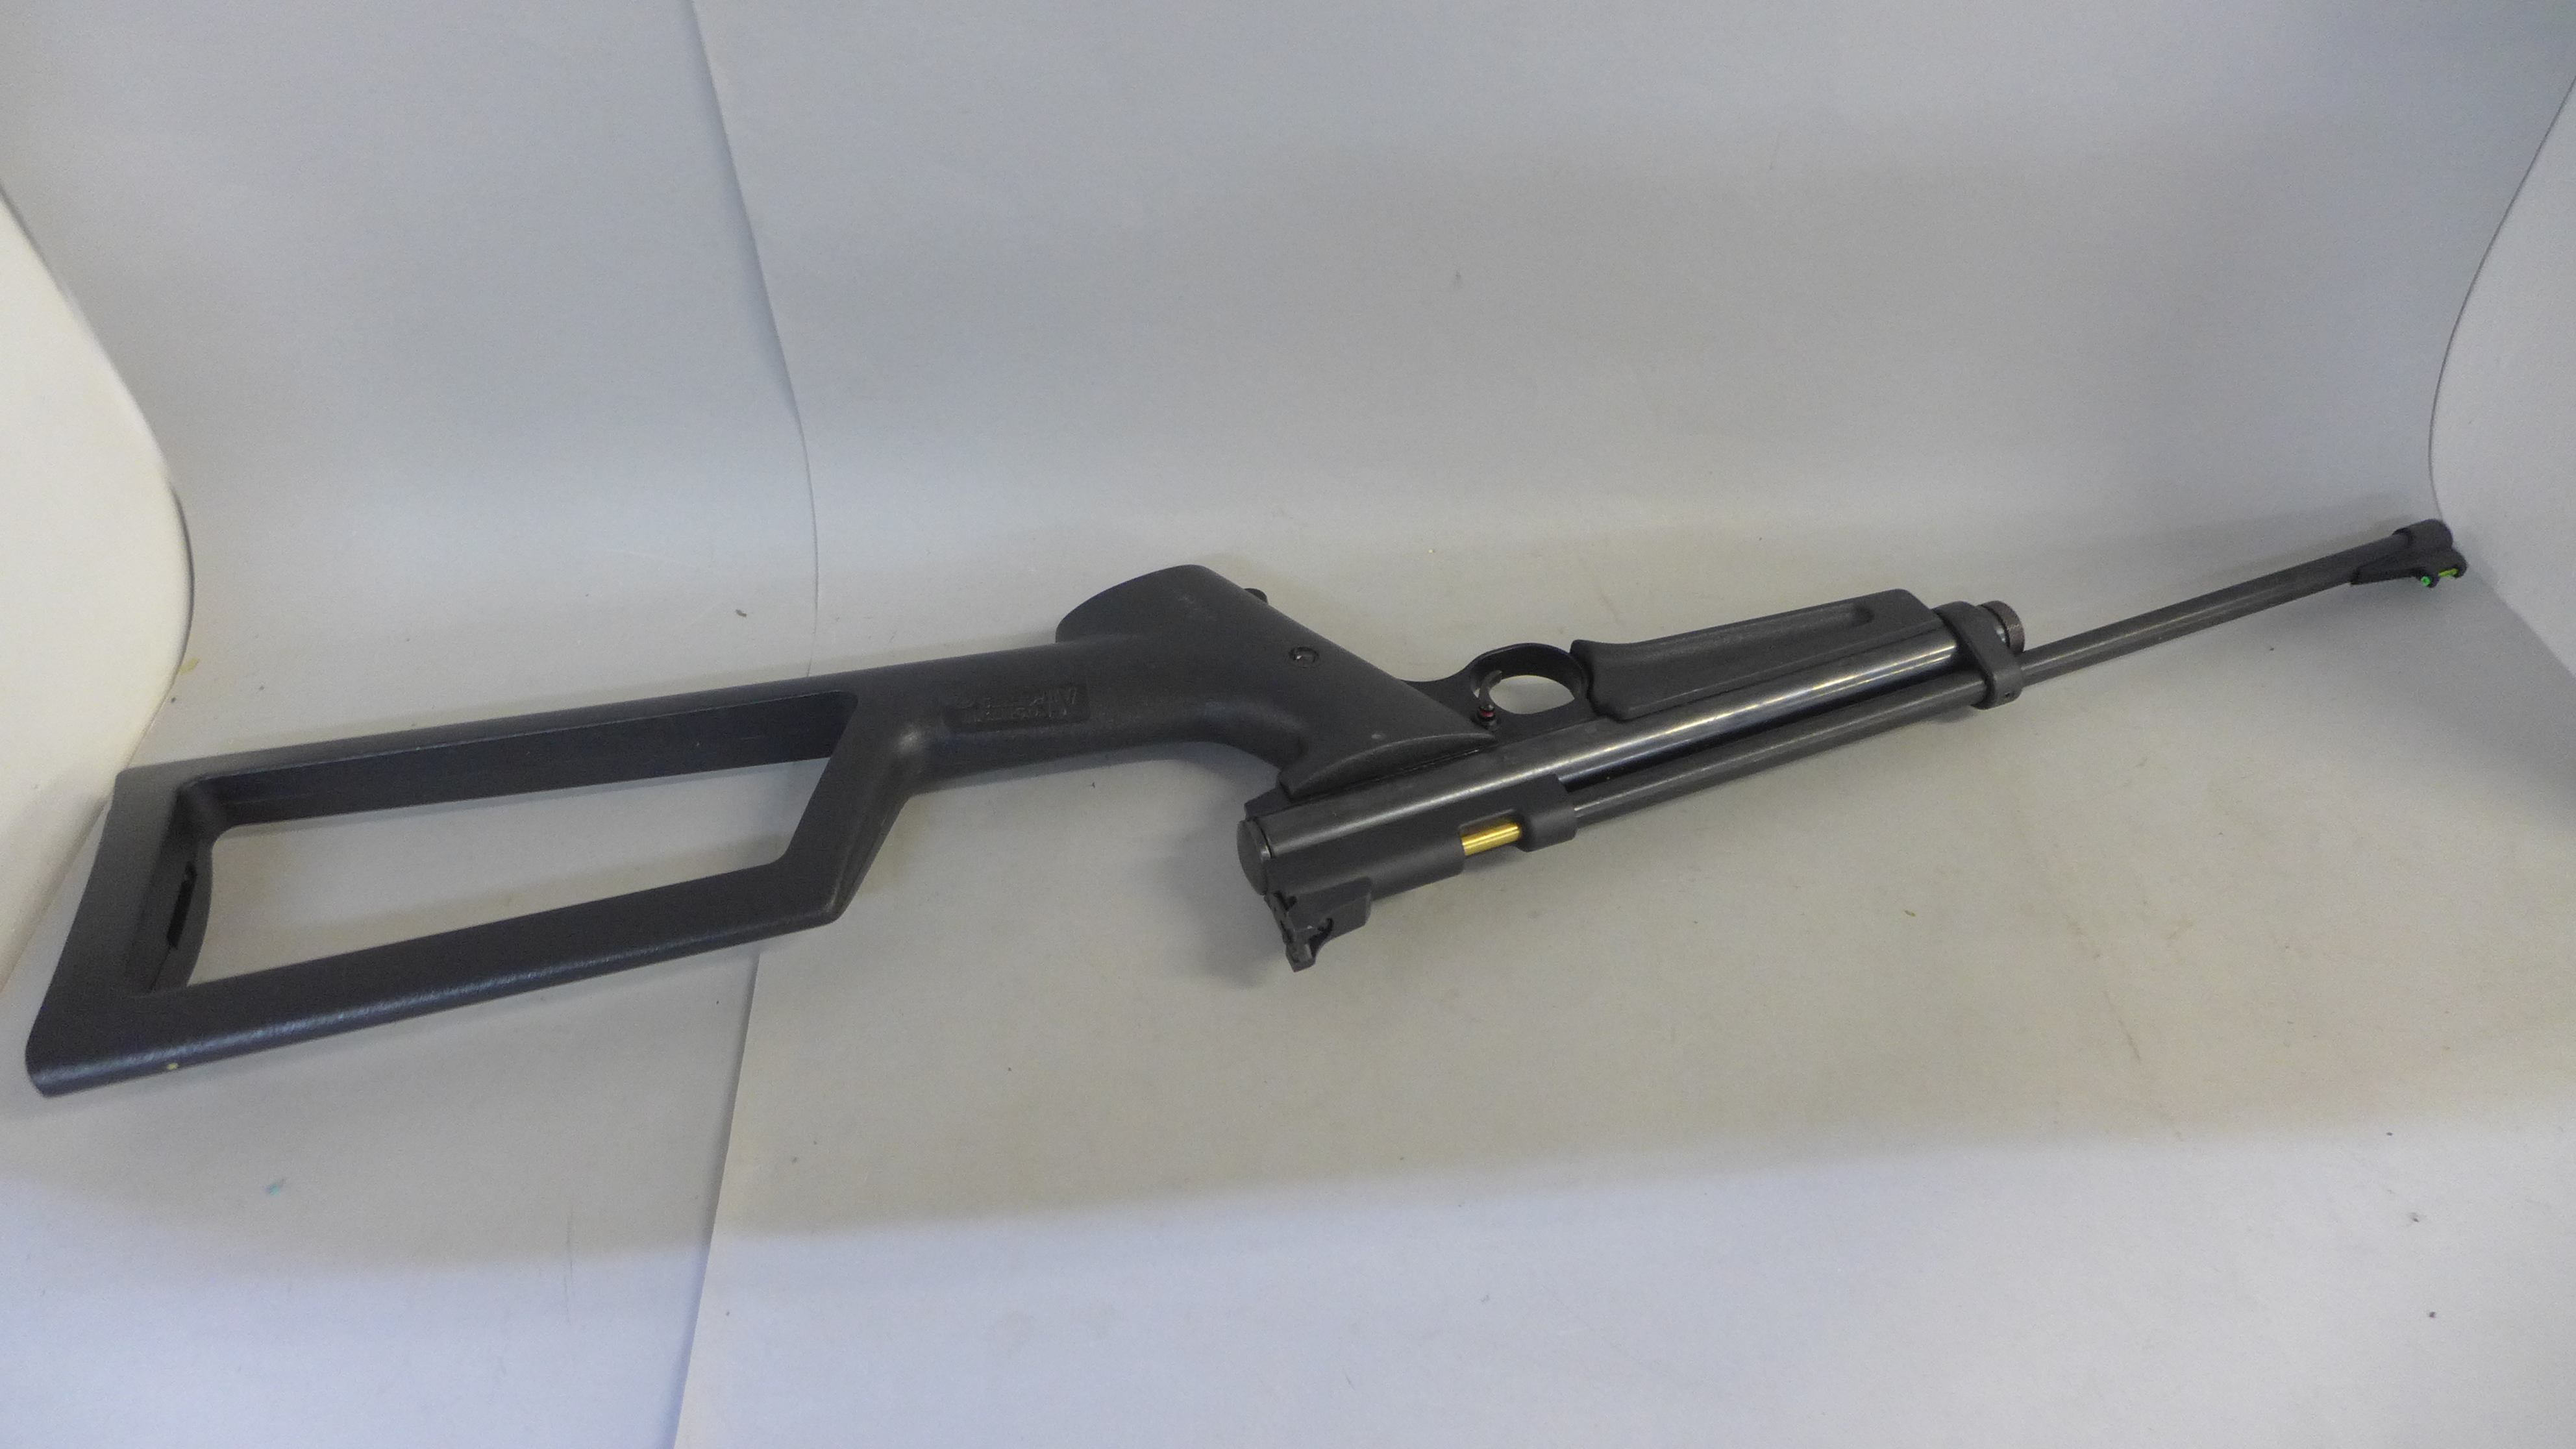 A Crosman model 2250B single shot CO2 target shooting air gun, 0.22 calibre, with owner's manual - Image 4 of 5